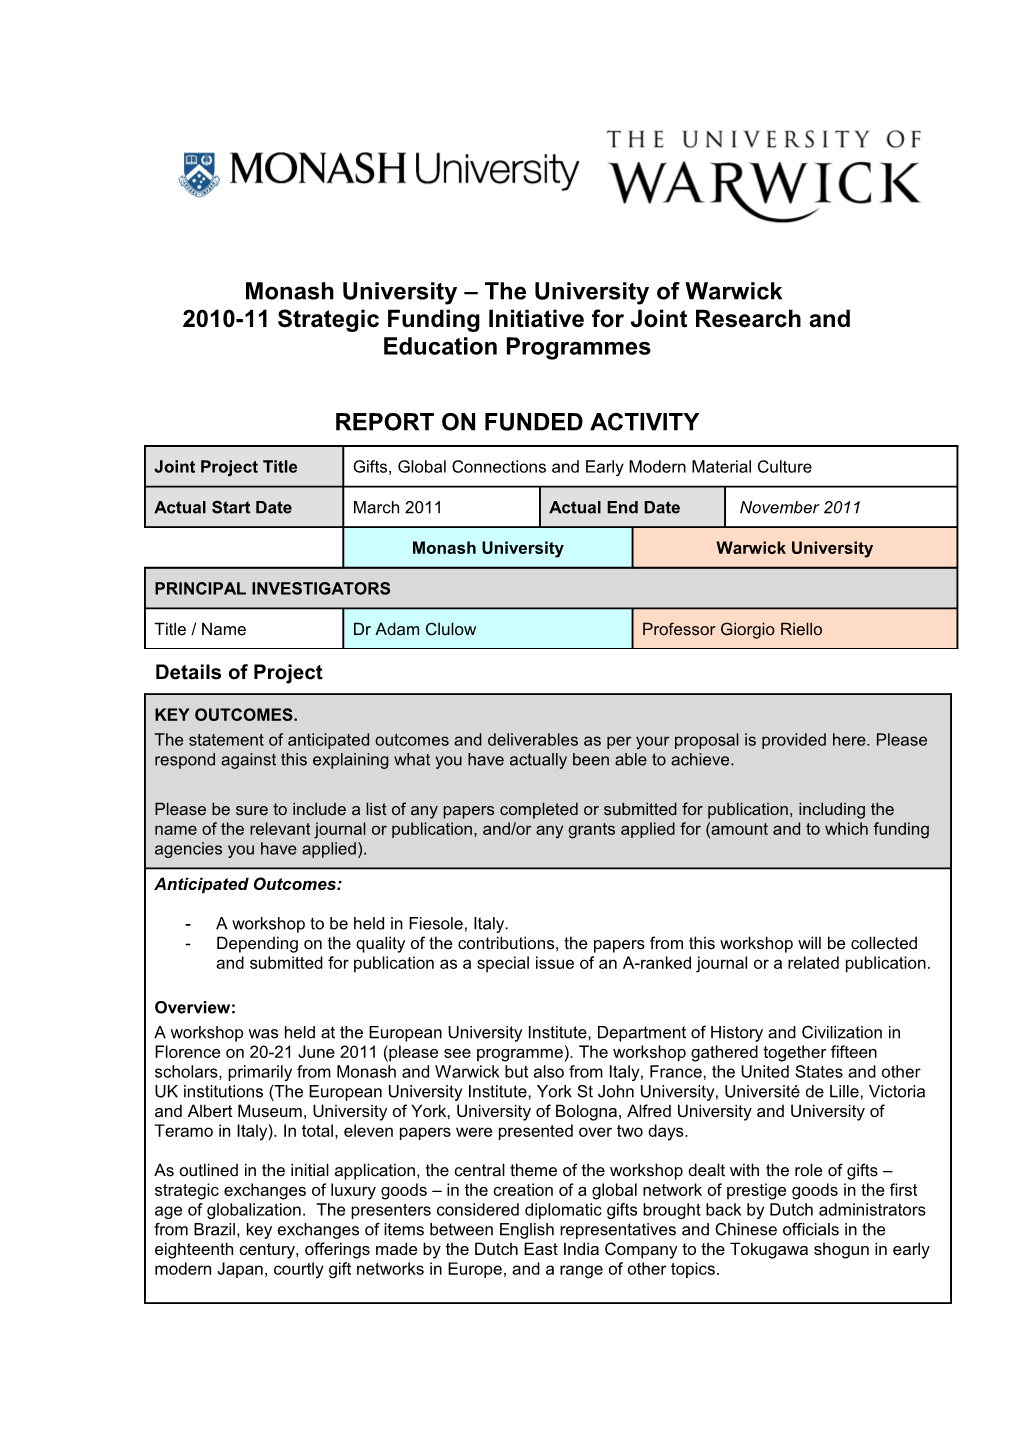 Monash University the University of Warwick 2010-11 Strategic Funding Initiative for Joint